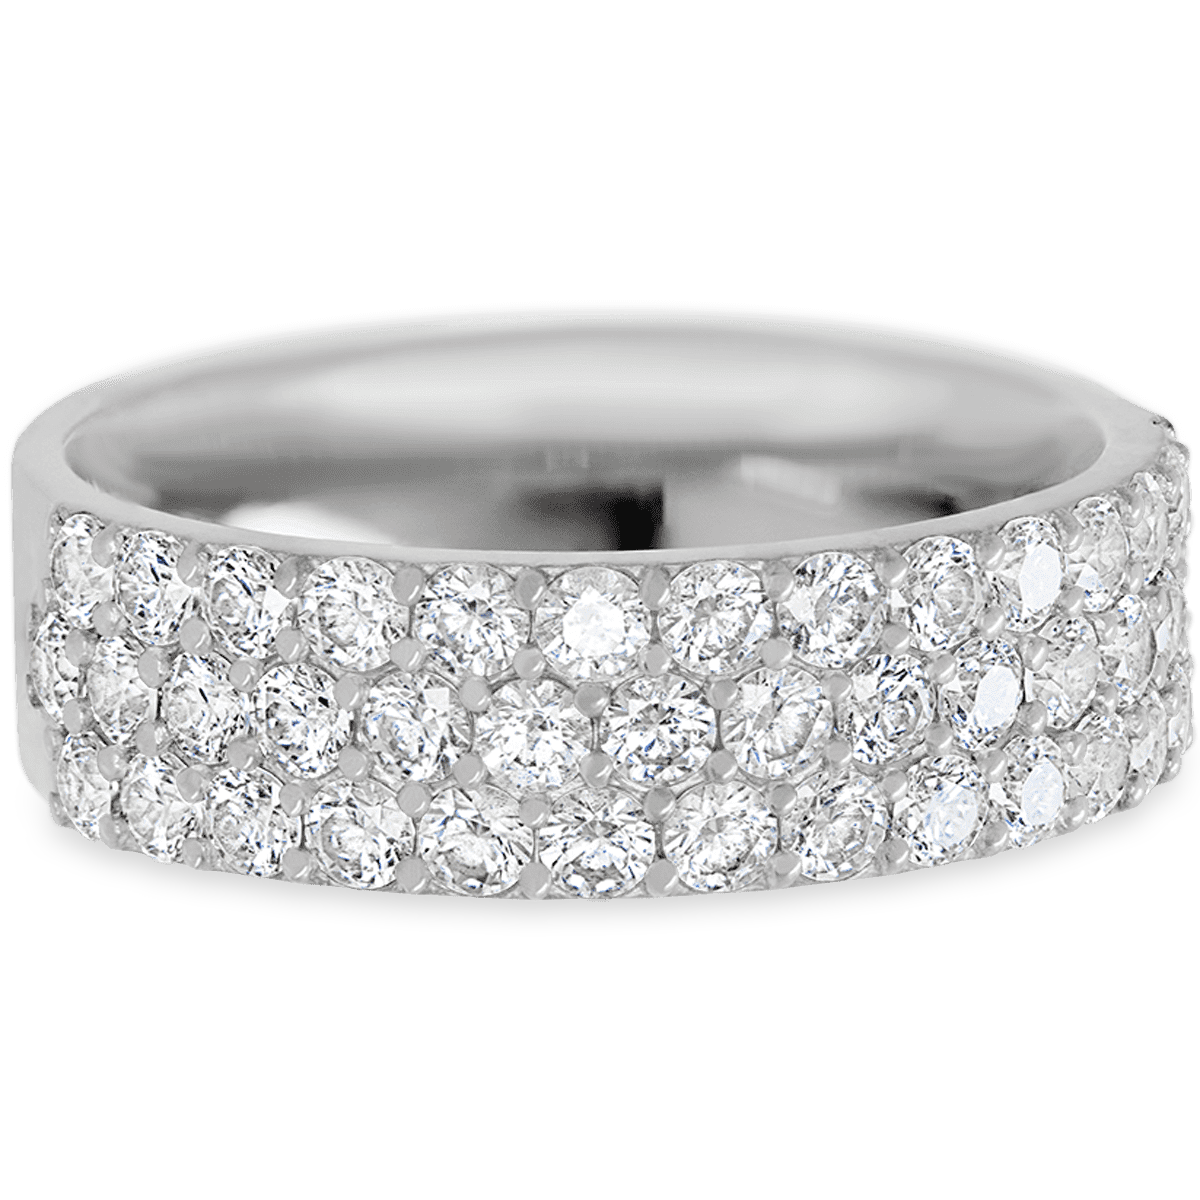 Dazzling 14k White Gold + White Diamonds Womens Wedding or Everyday Ring